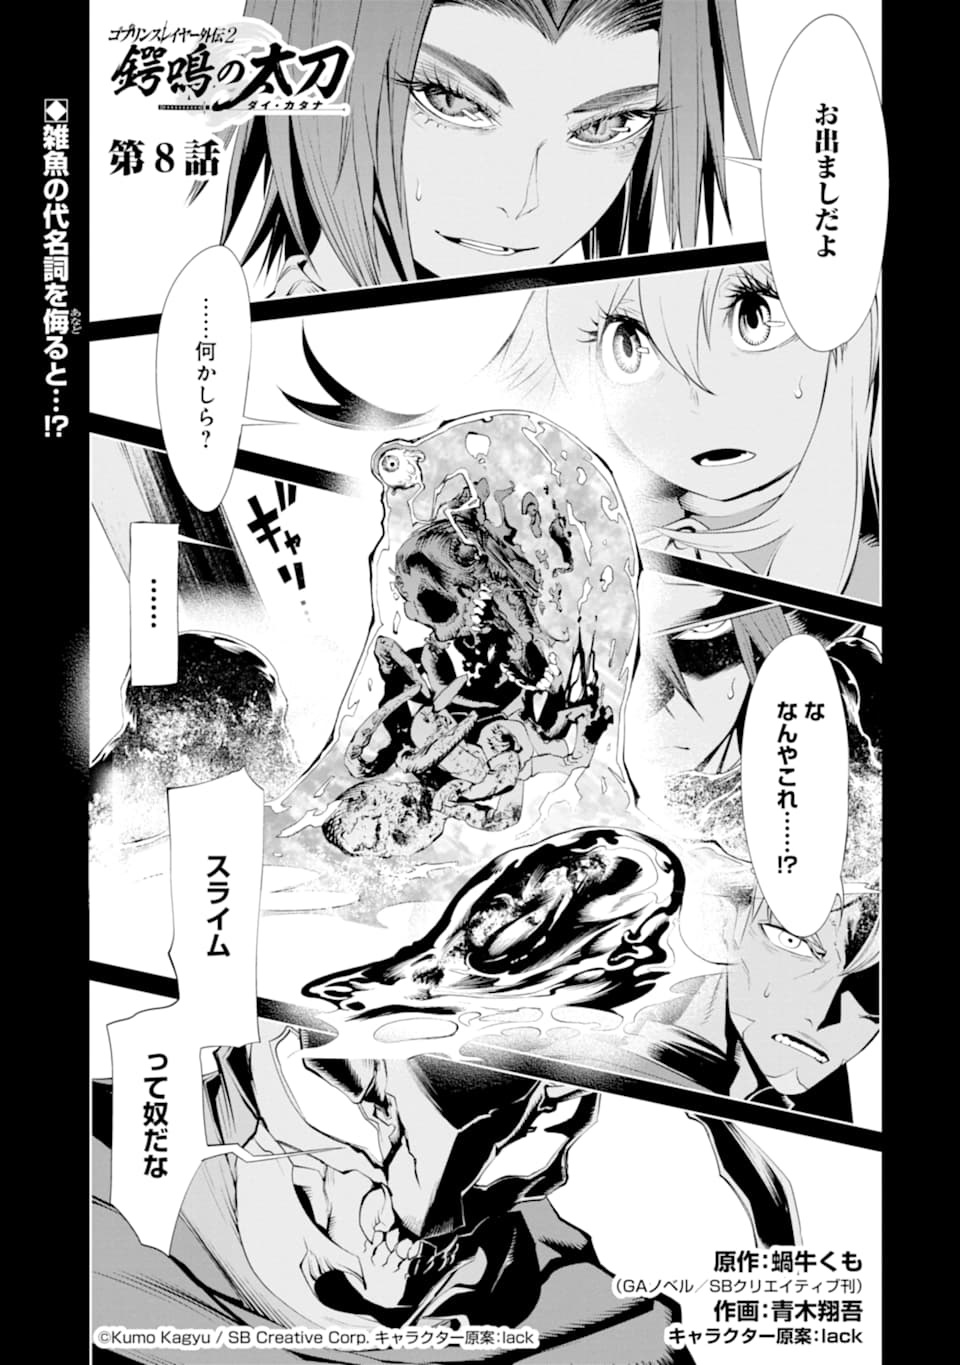 Goblin Slayer Side Story II Dai Katana Manga Volume 1